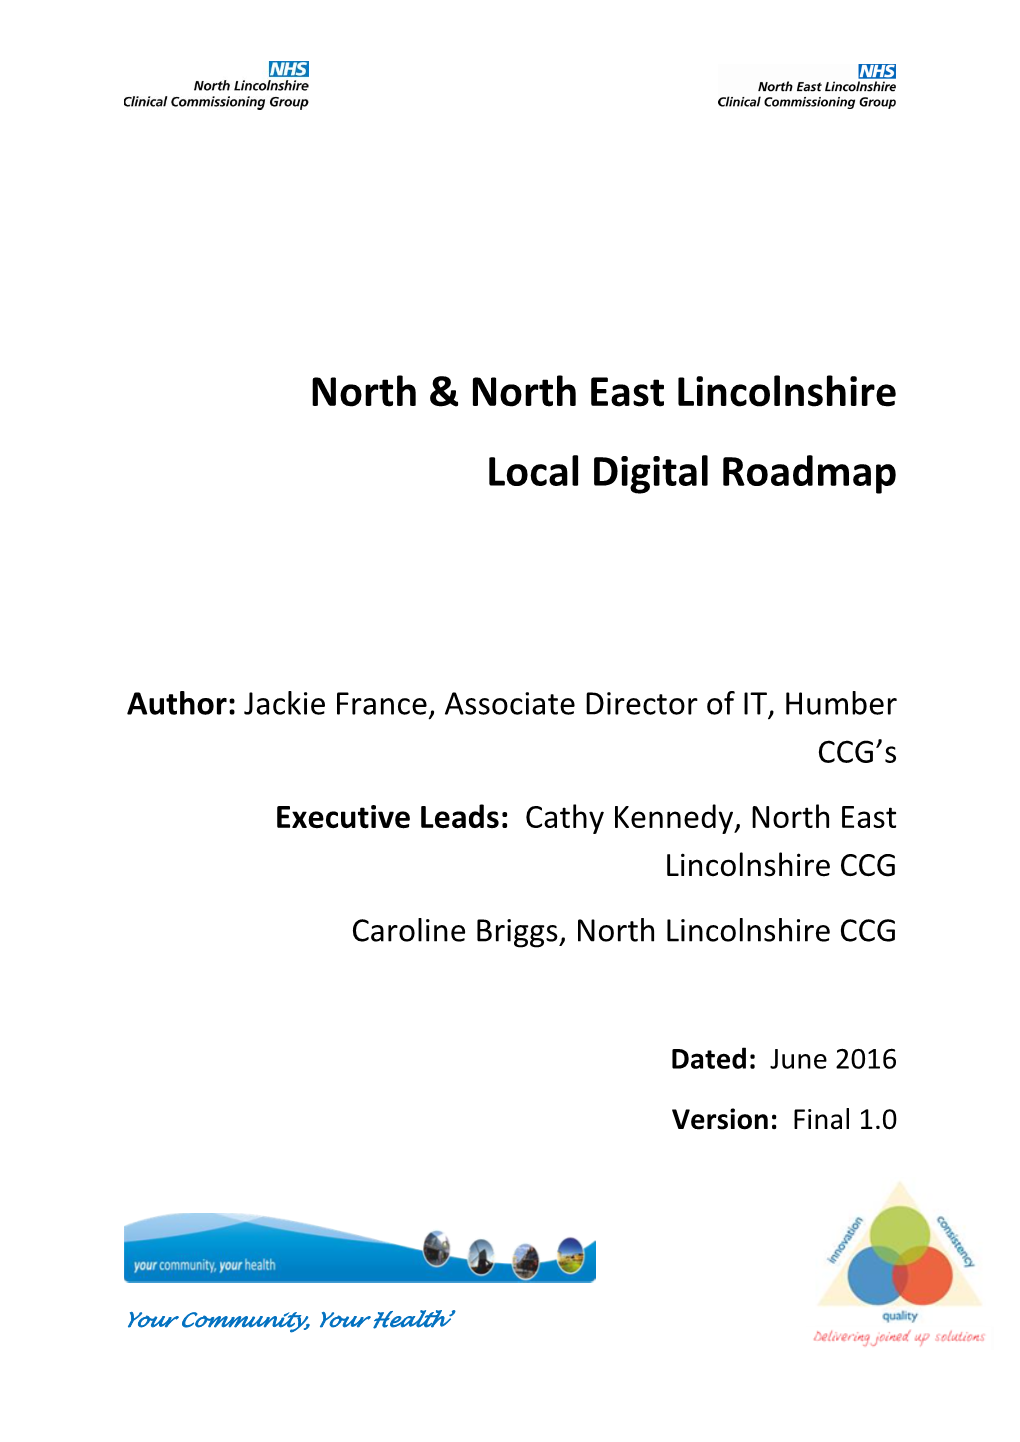 North & North East Lincolnshire Local Digital Roadmap